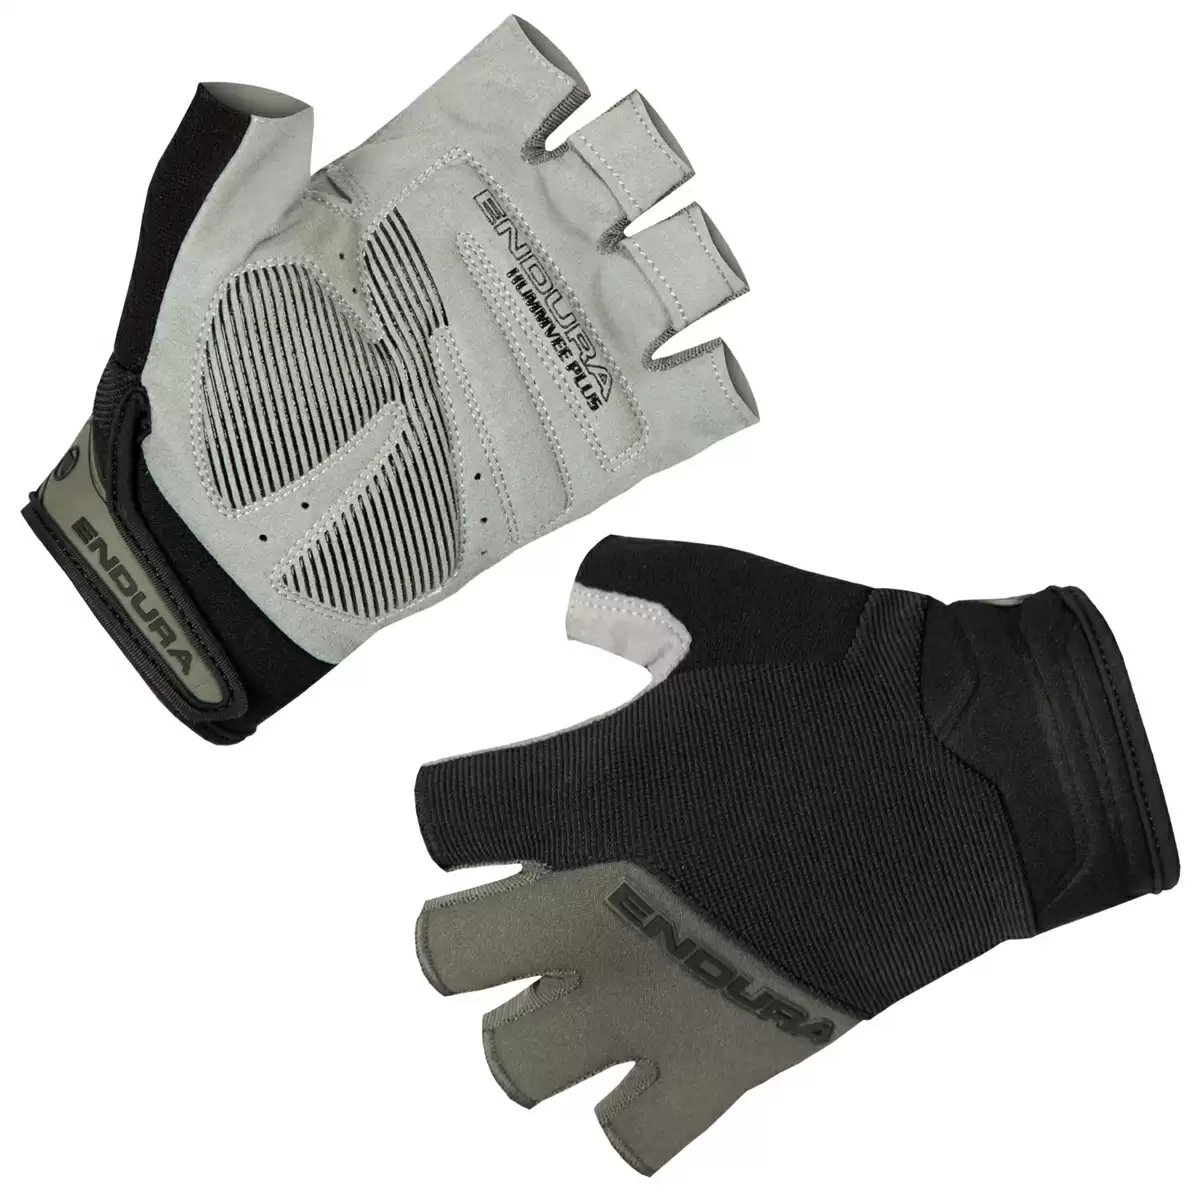 Short gloves Hummvee Plus Mitt II black size M - image